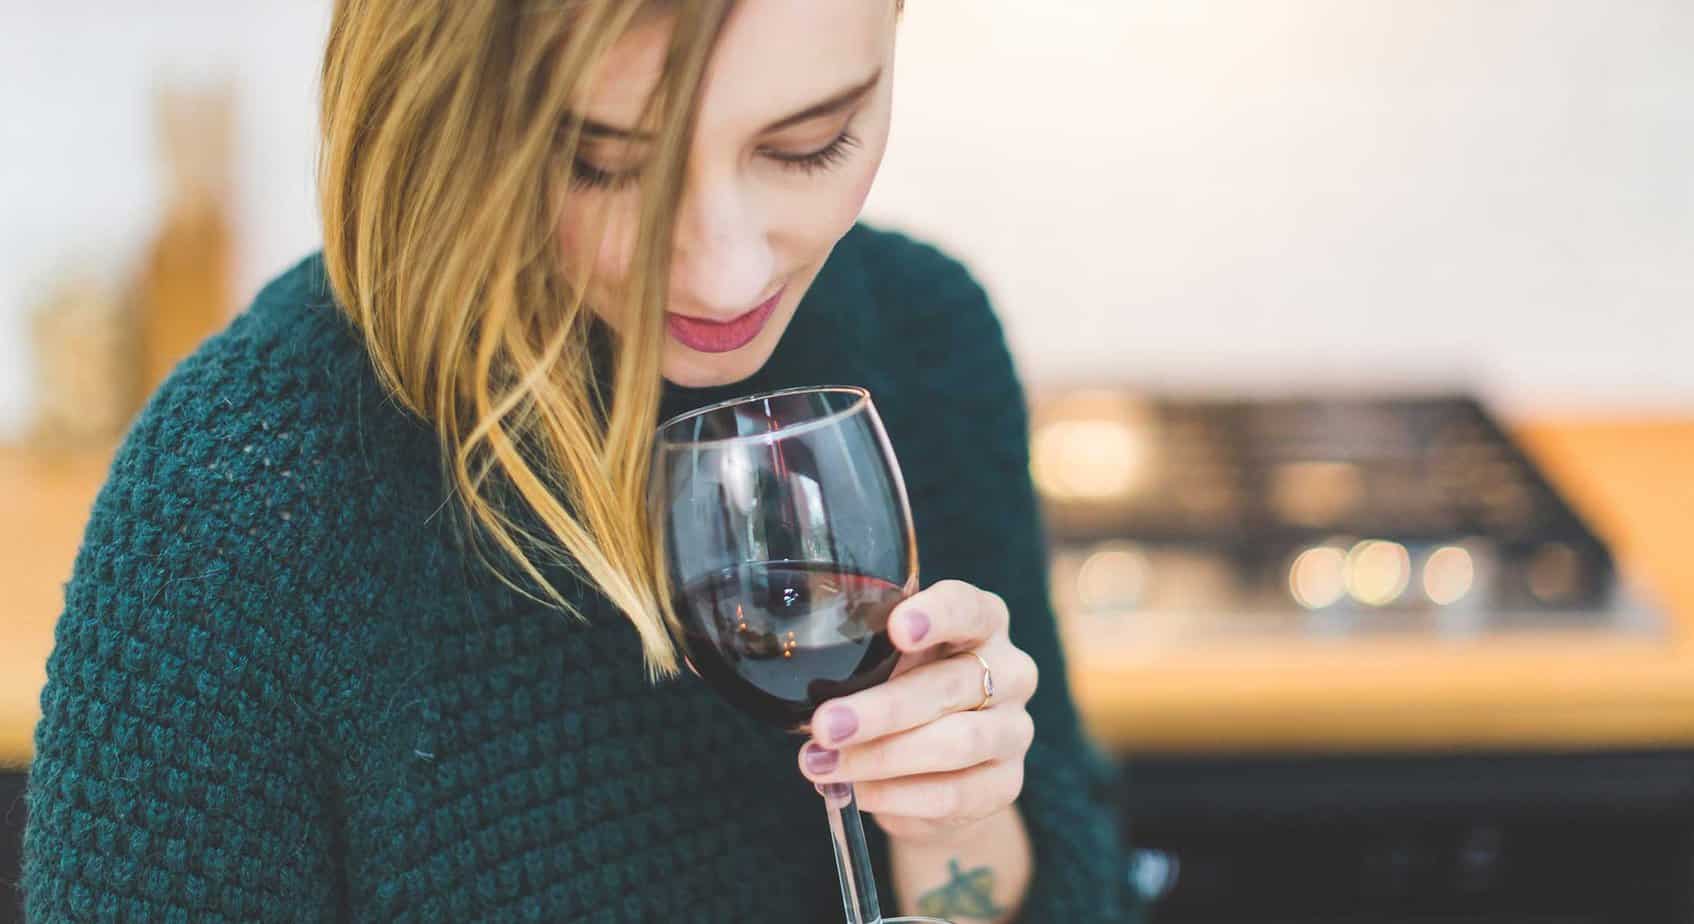 Grape Depression: Wine Mom Culture Normalizes Dangerous Drinking